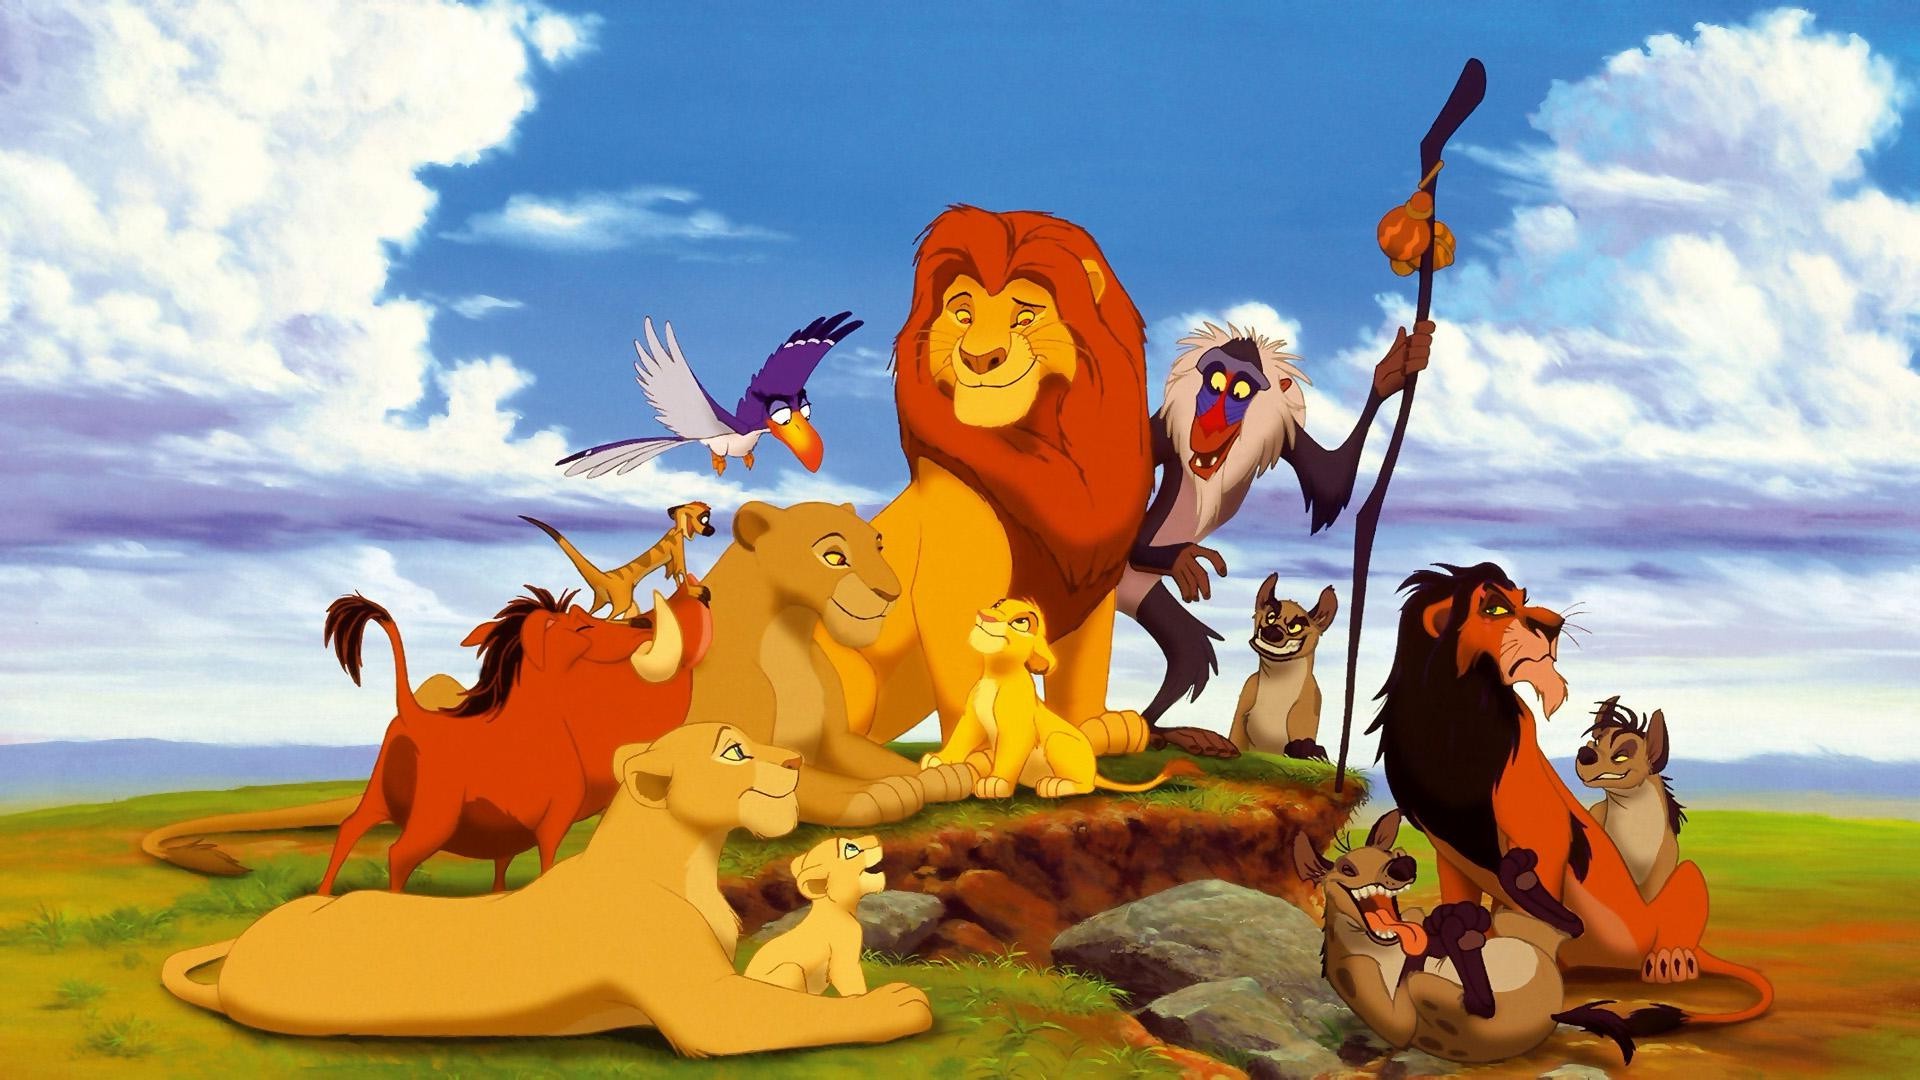 movies, Rafiki, Disney, Mufasa, Simba, Timon, Pumba, Zazu, Nala Wallpapers  HD / Desktop and Mobile Backgrounds